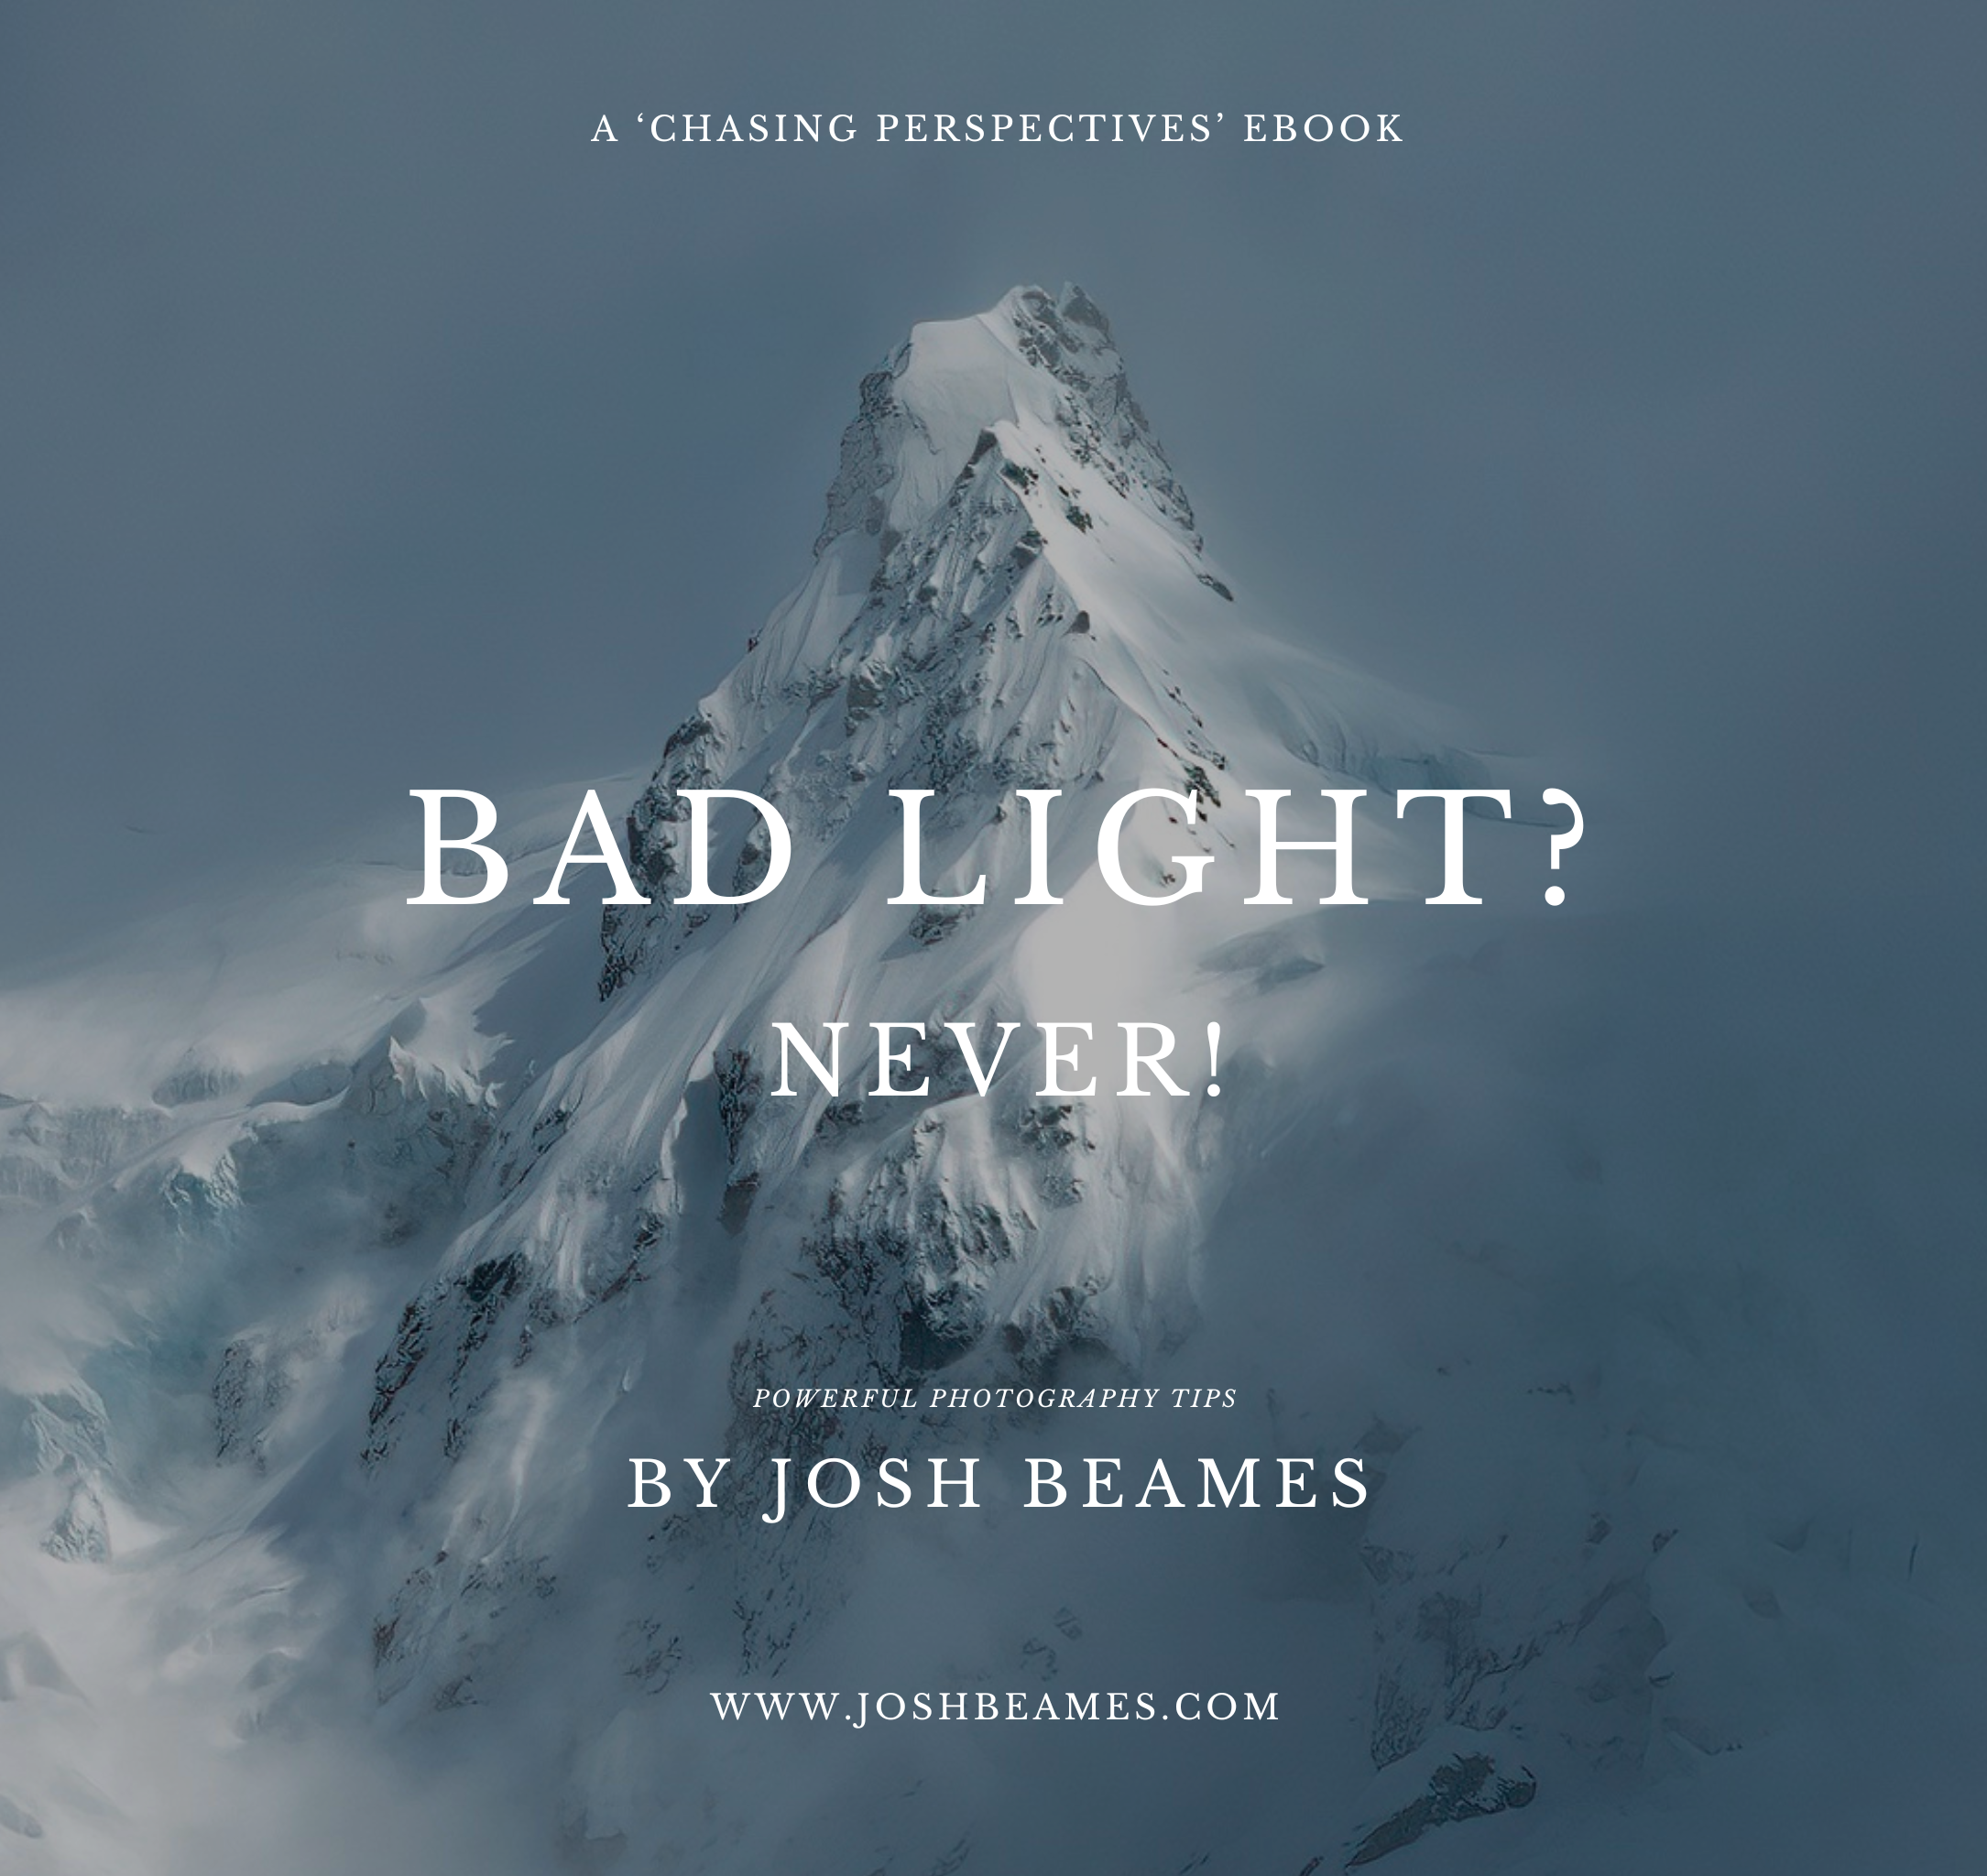 'Bad light? Never!' FREE eBook